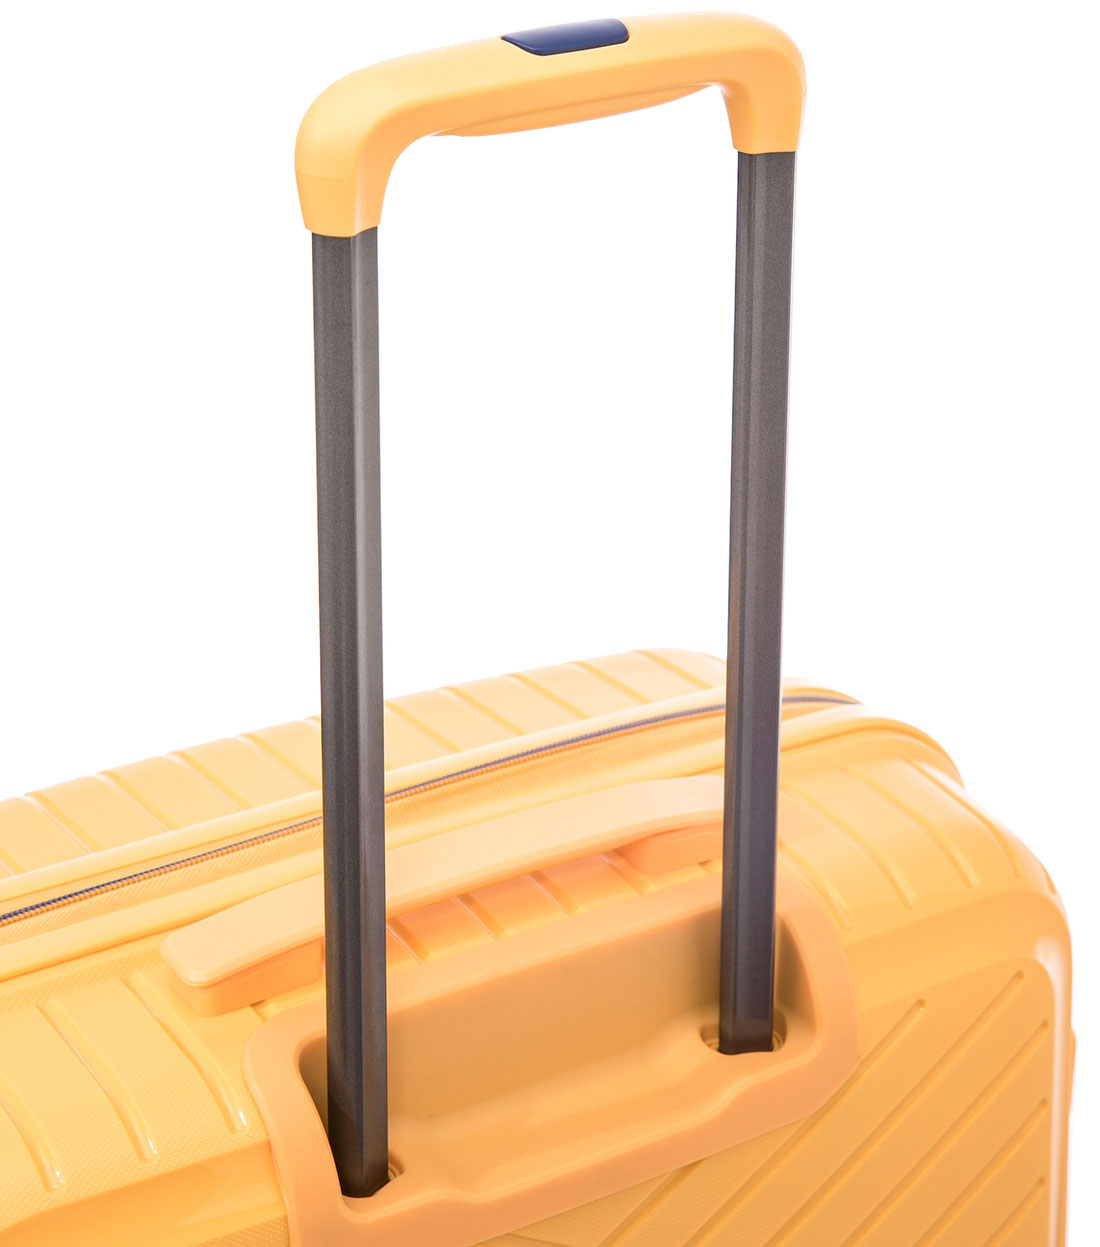 Малый чемодан Somsonya PP Cairo L (55 см) Yellow ~ручная кладь~